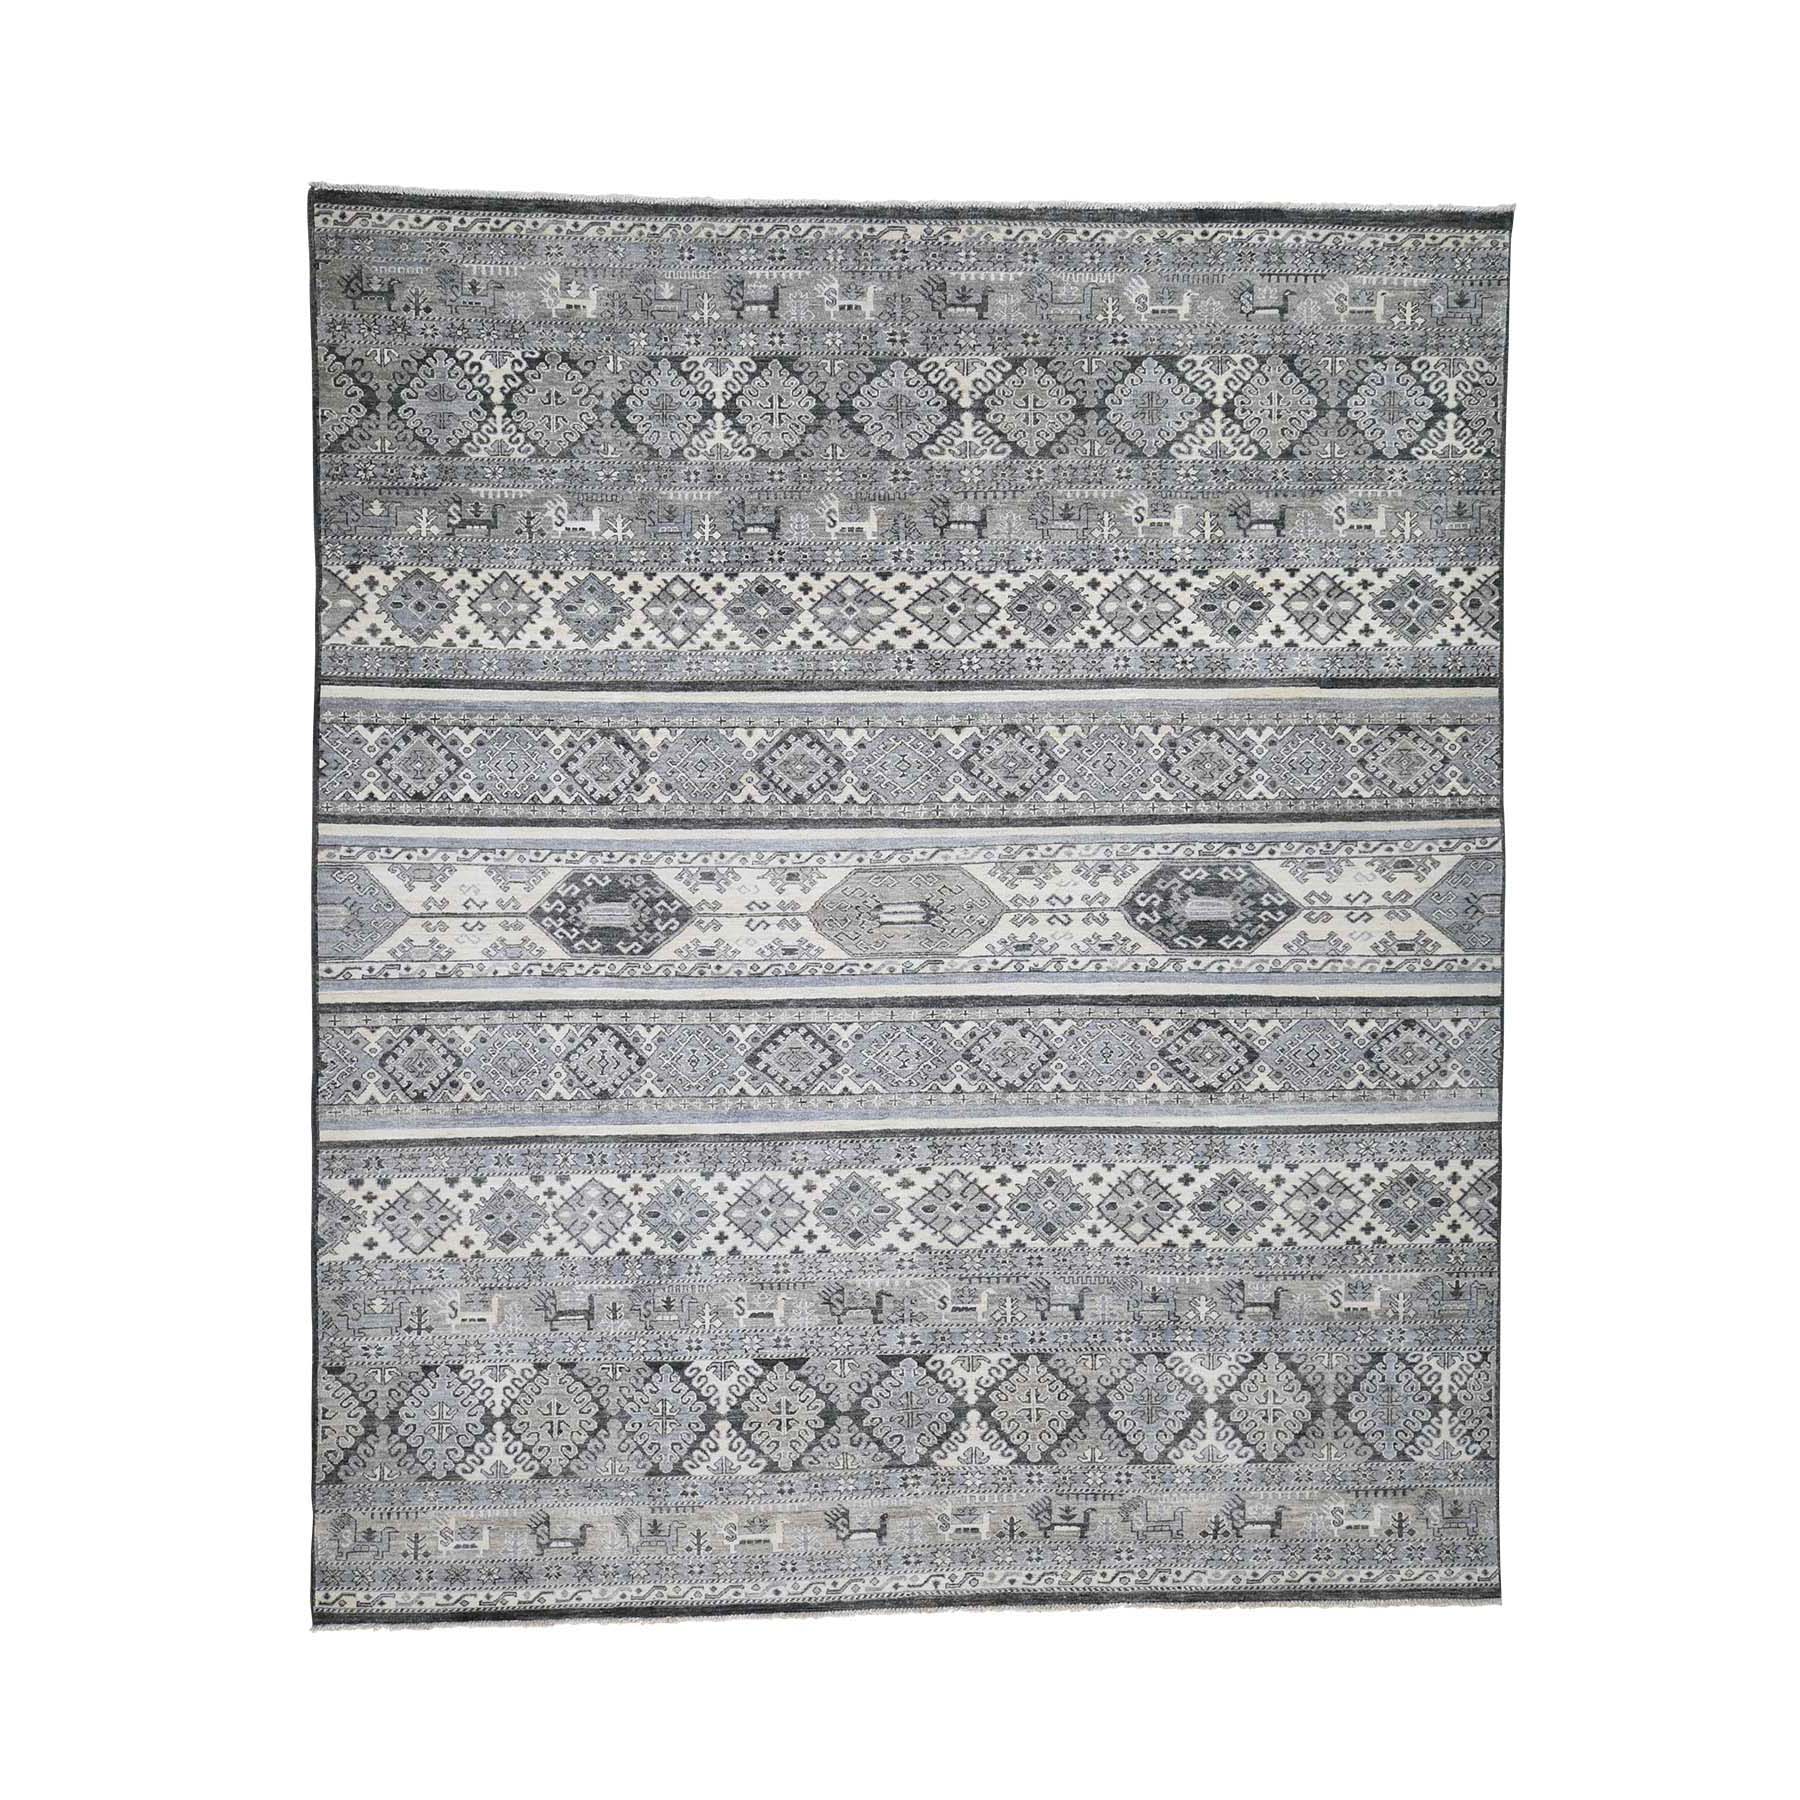 8'6"x10' Super Kazak Khorjin Design Natural Colors Hand Woven Oriental Rug 